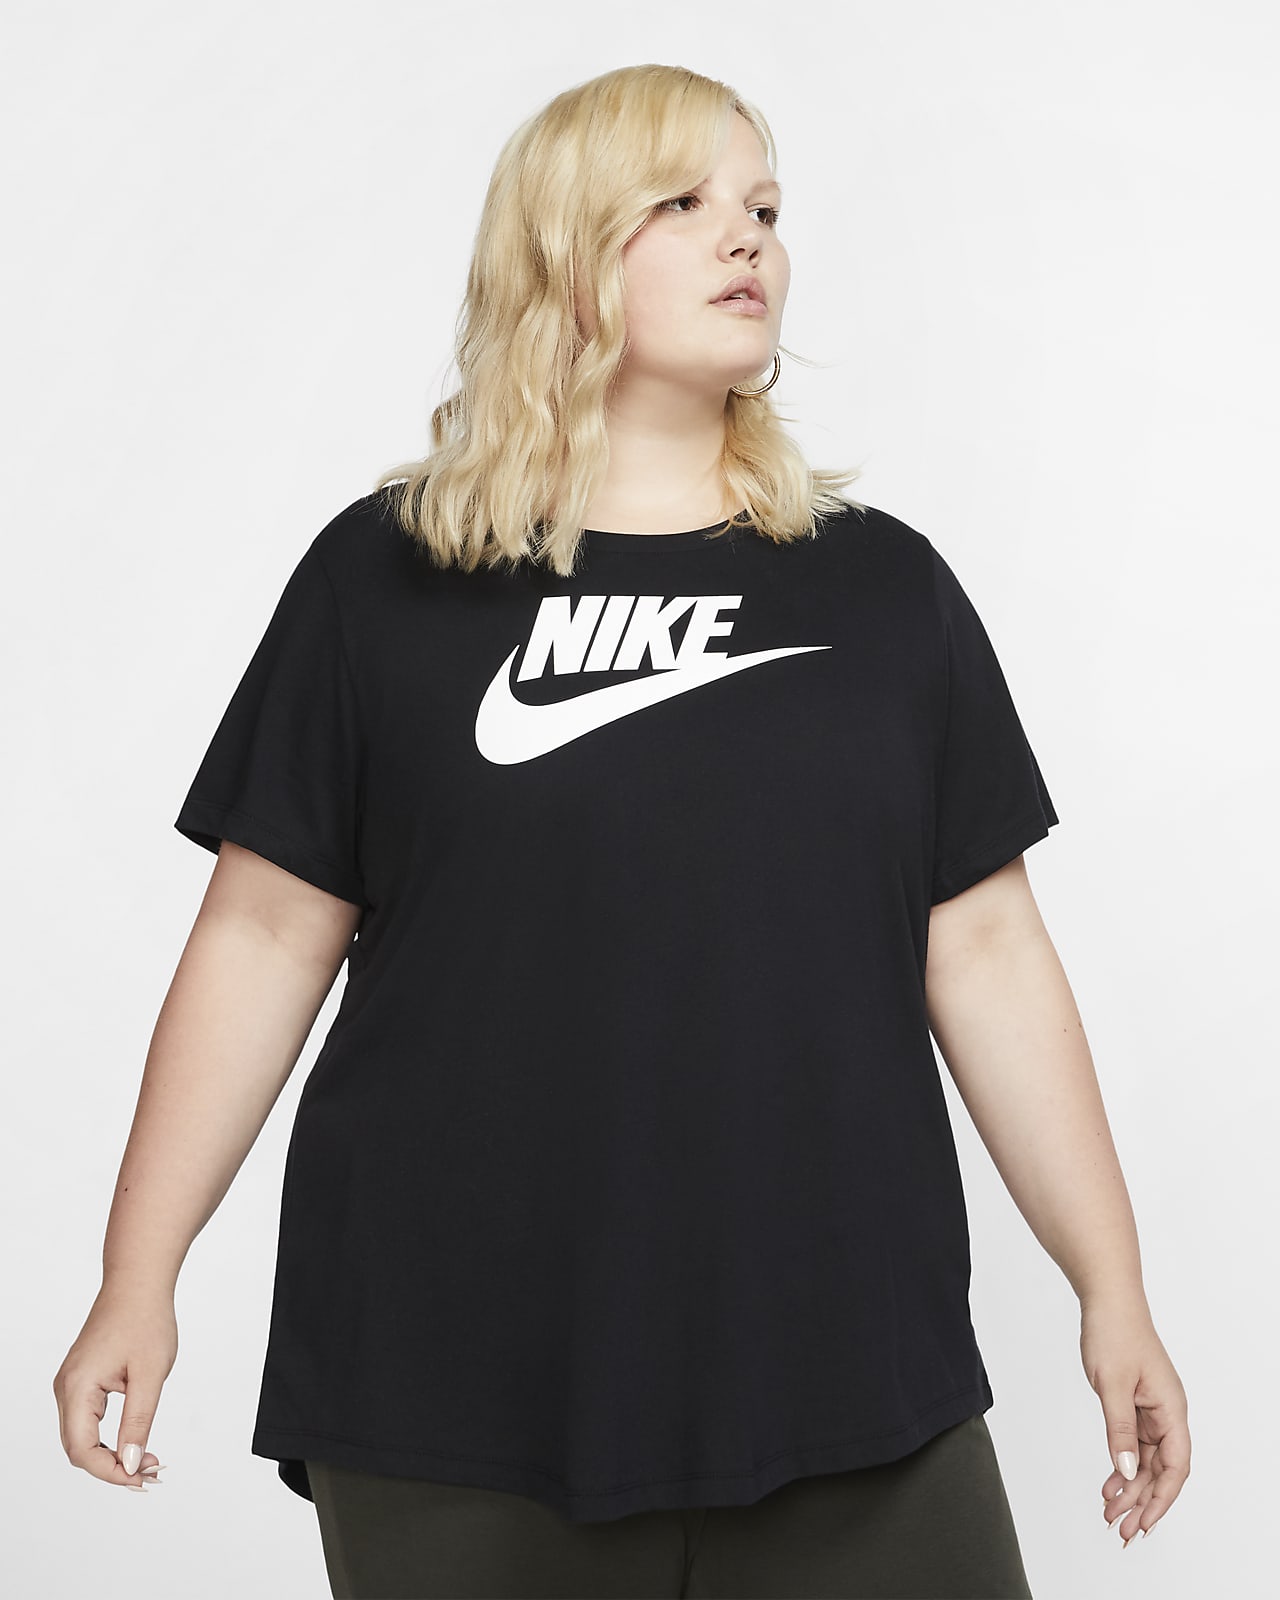 Plus Size Nike T-Shirt - Dresses Images 2022